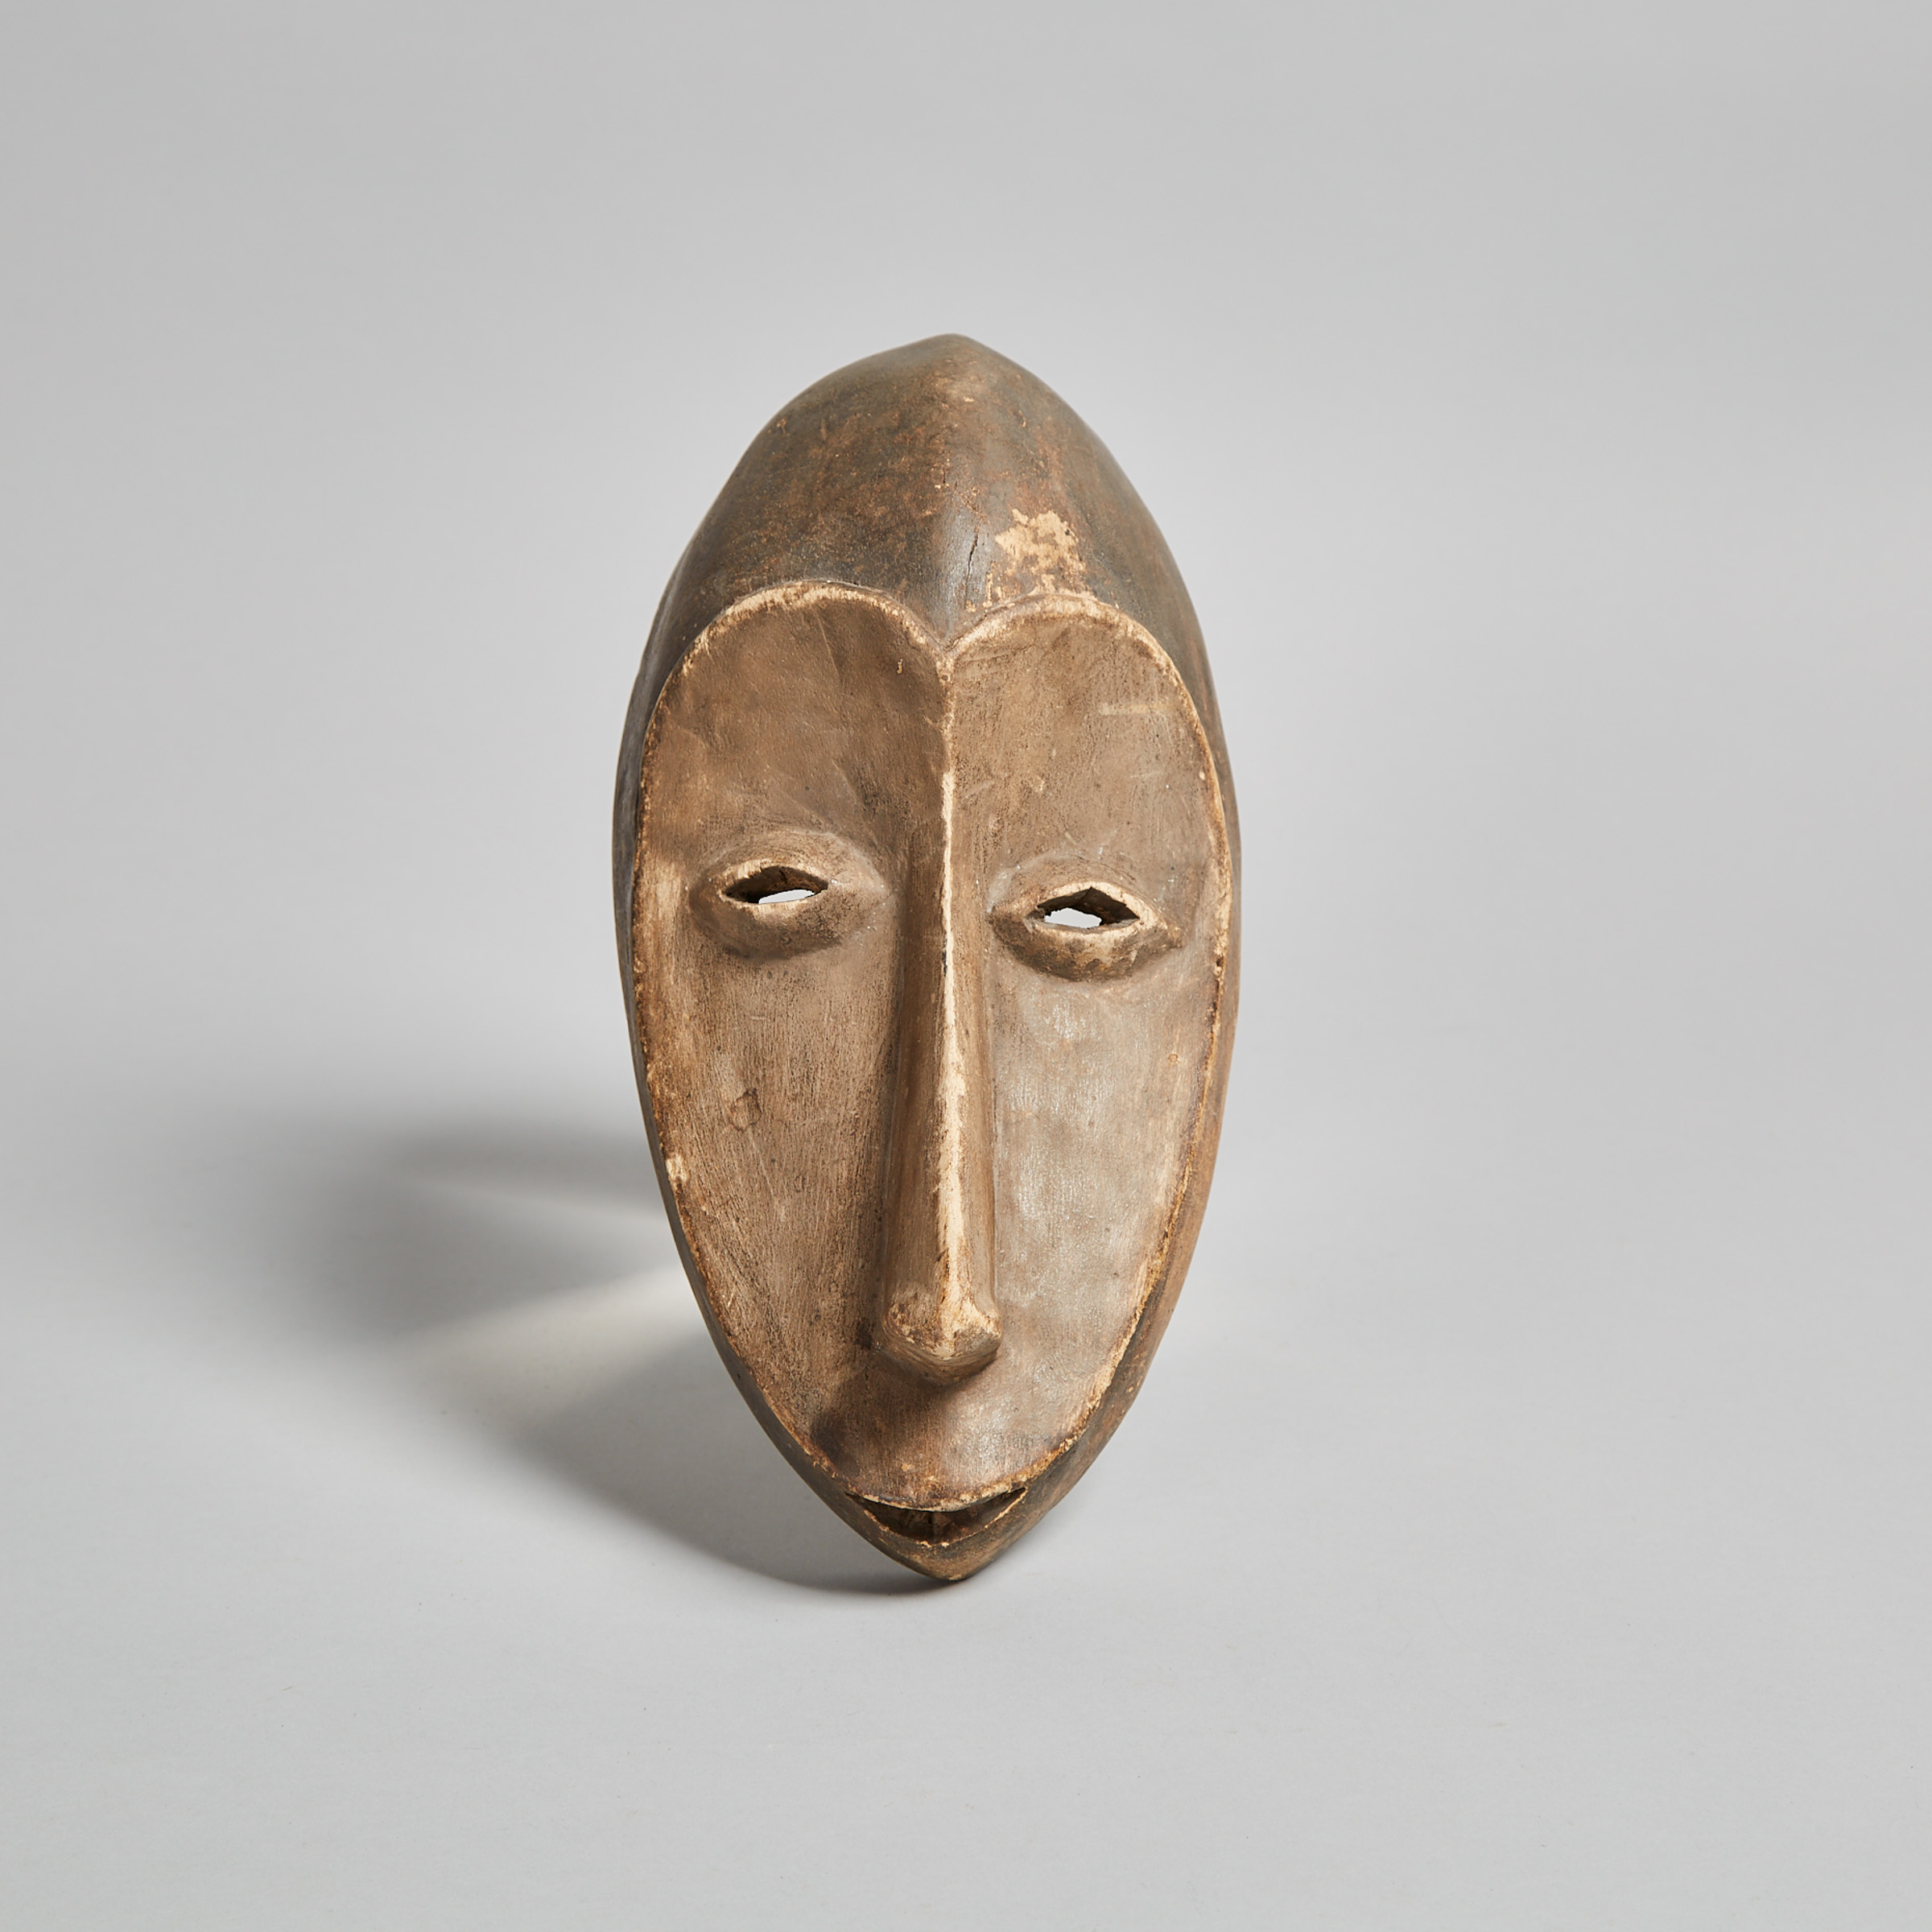 Lega Mask, Democratic Republic of Congo, Central Africa